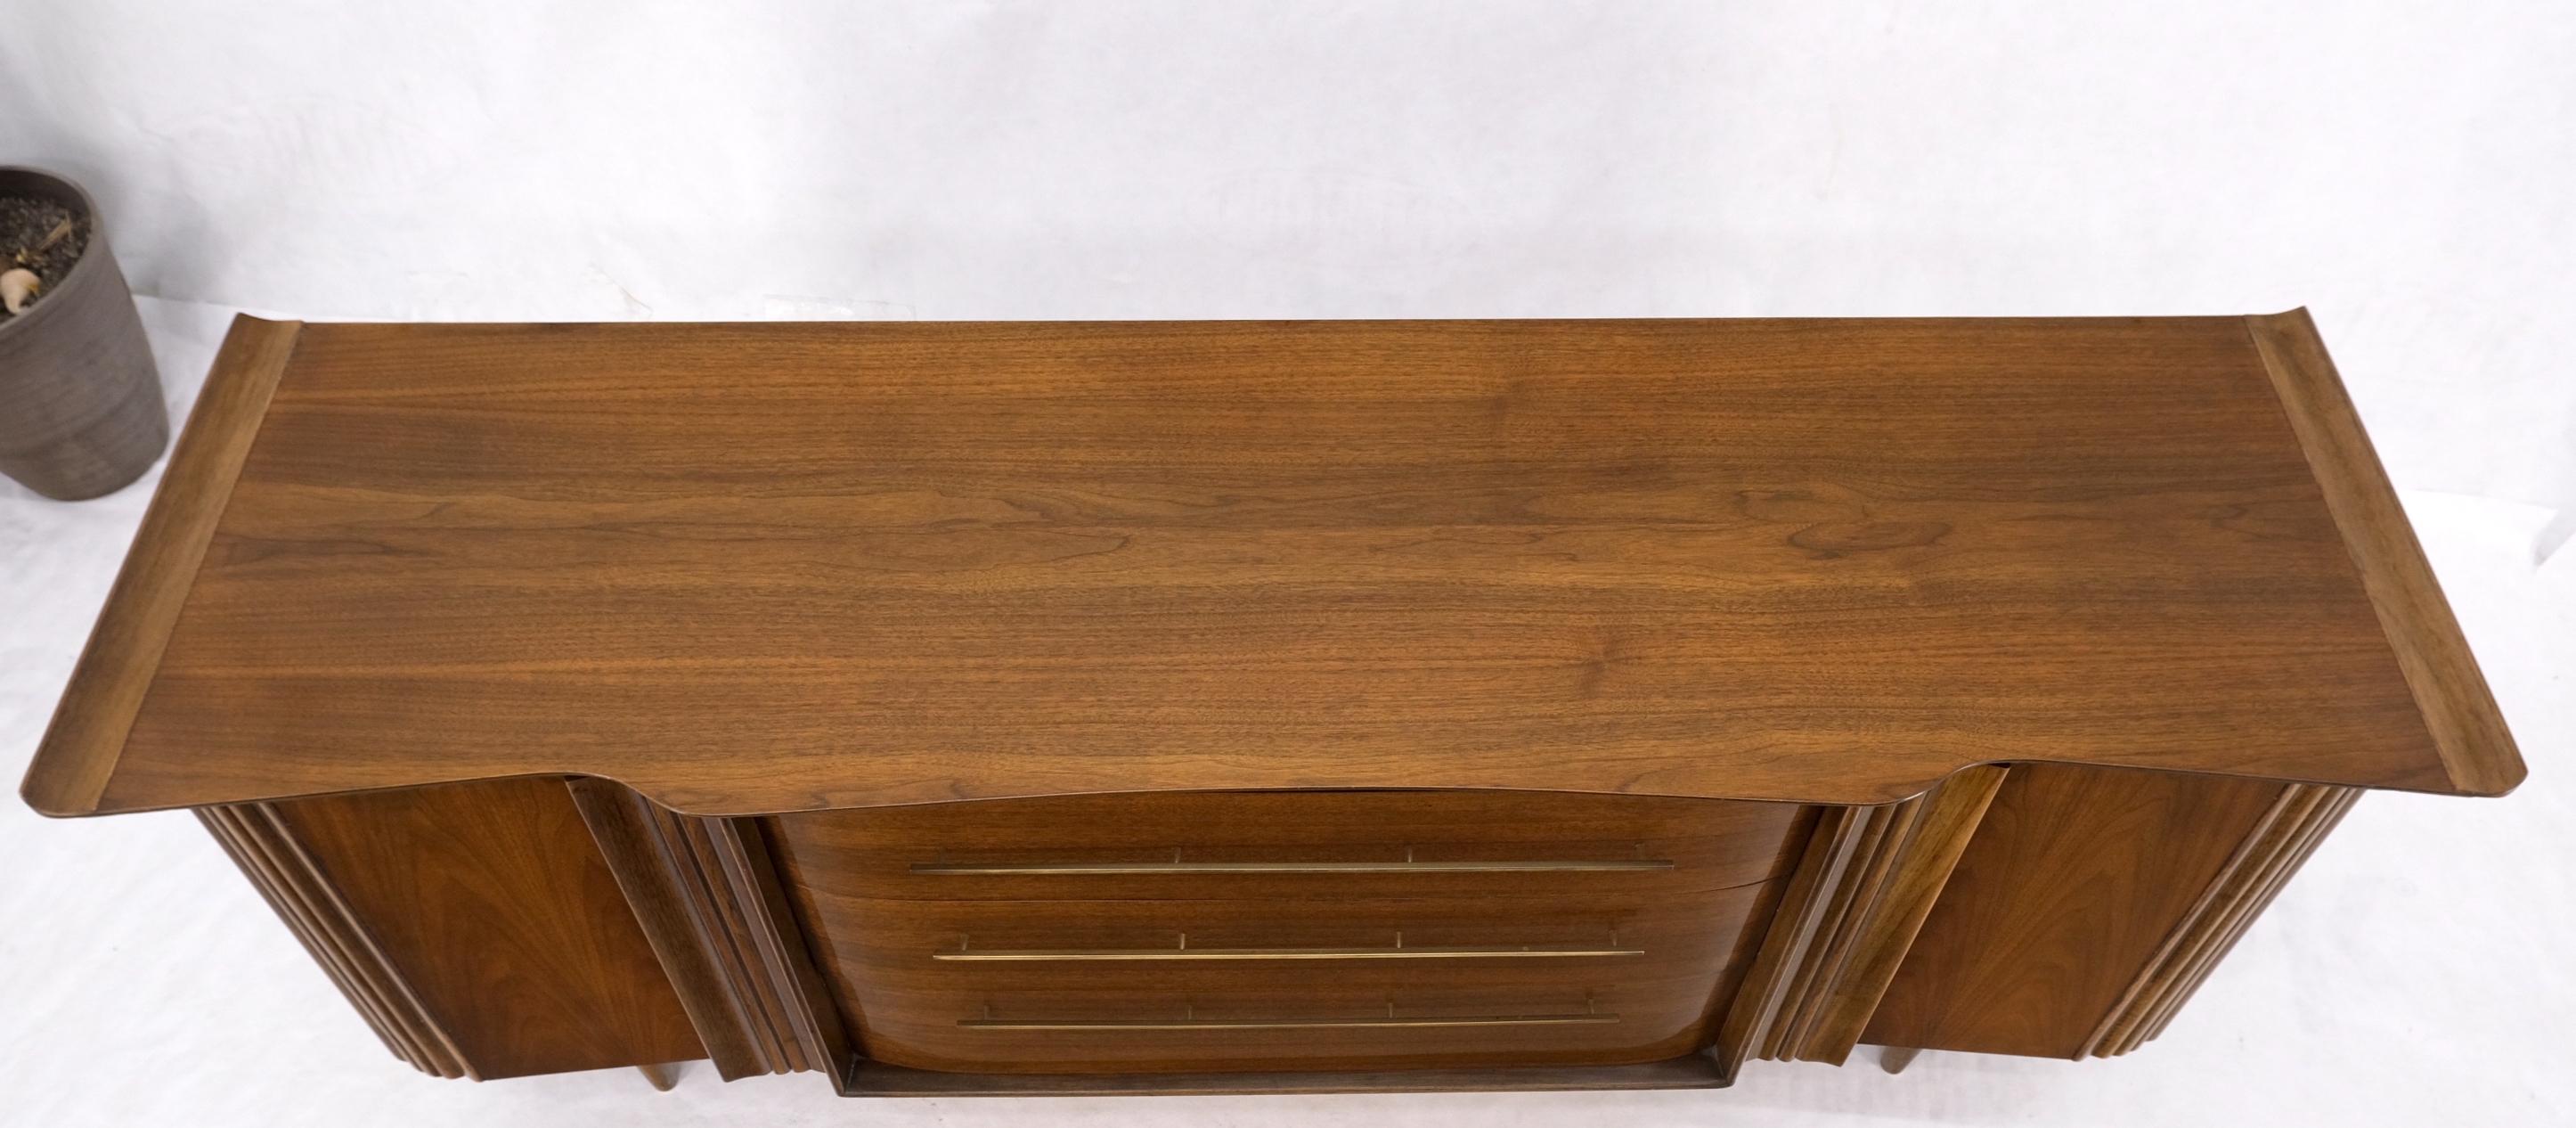 American Walnut long Dresser w/ Rolled Edges Curved Front Dresser Brass Pulls For Sale 5